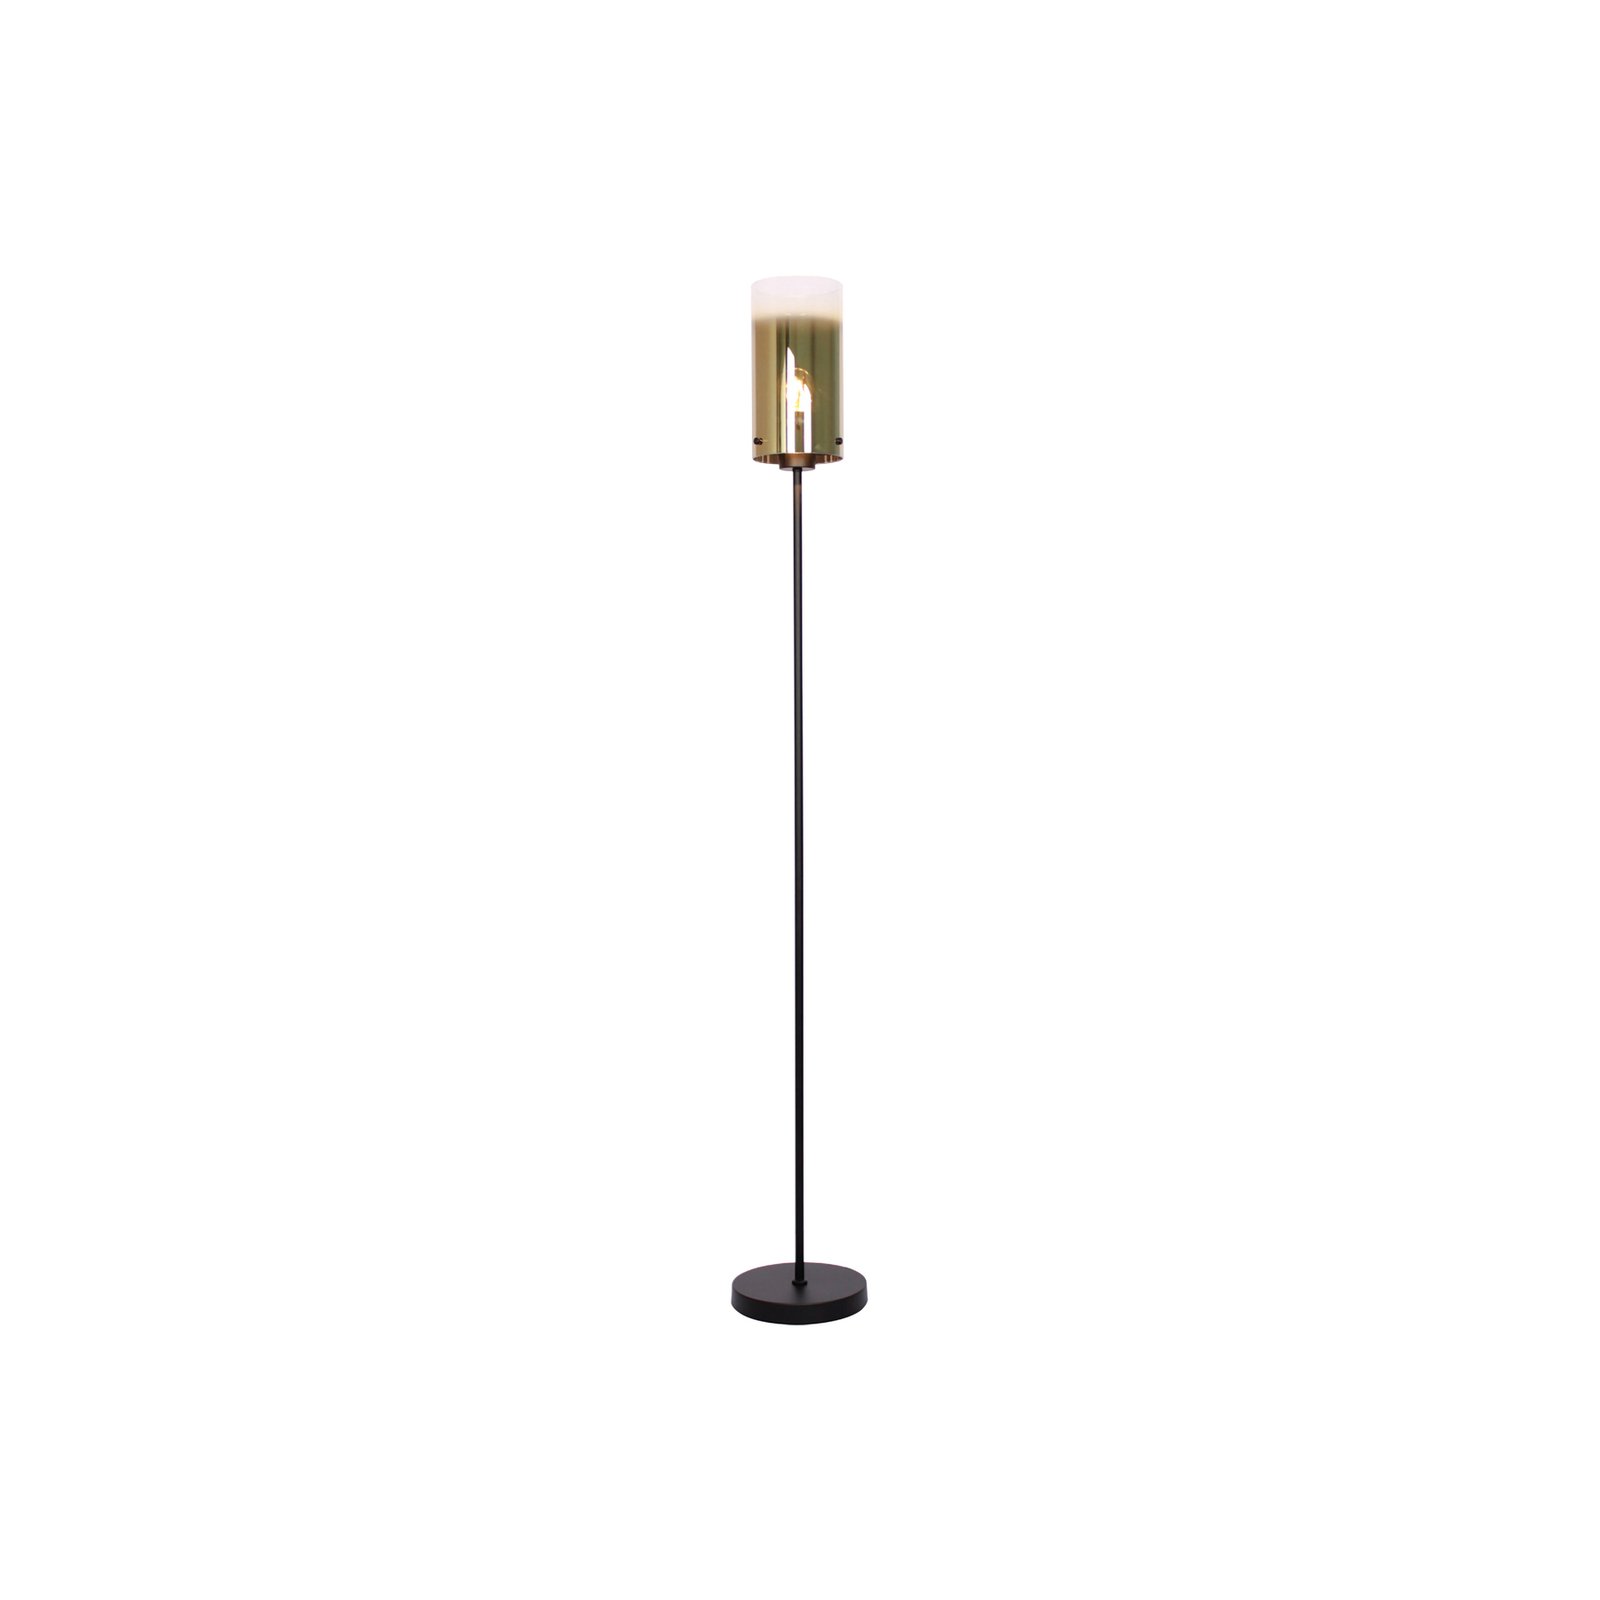 Stehlampe Ventotto, schwarz/gold, Höhe 165 cm, Metall/Glas